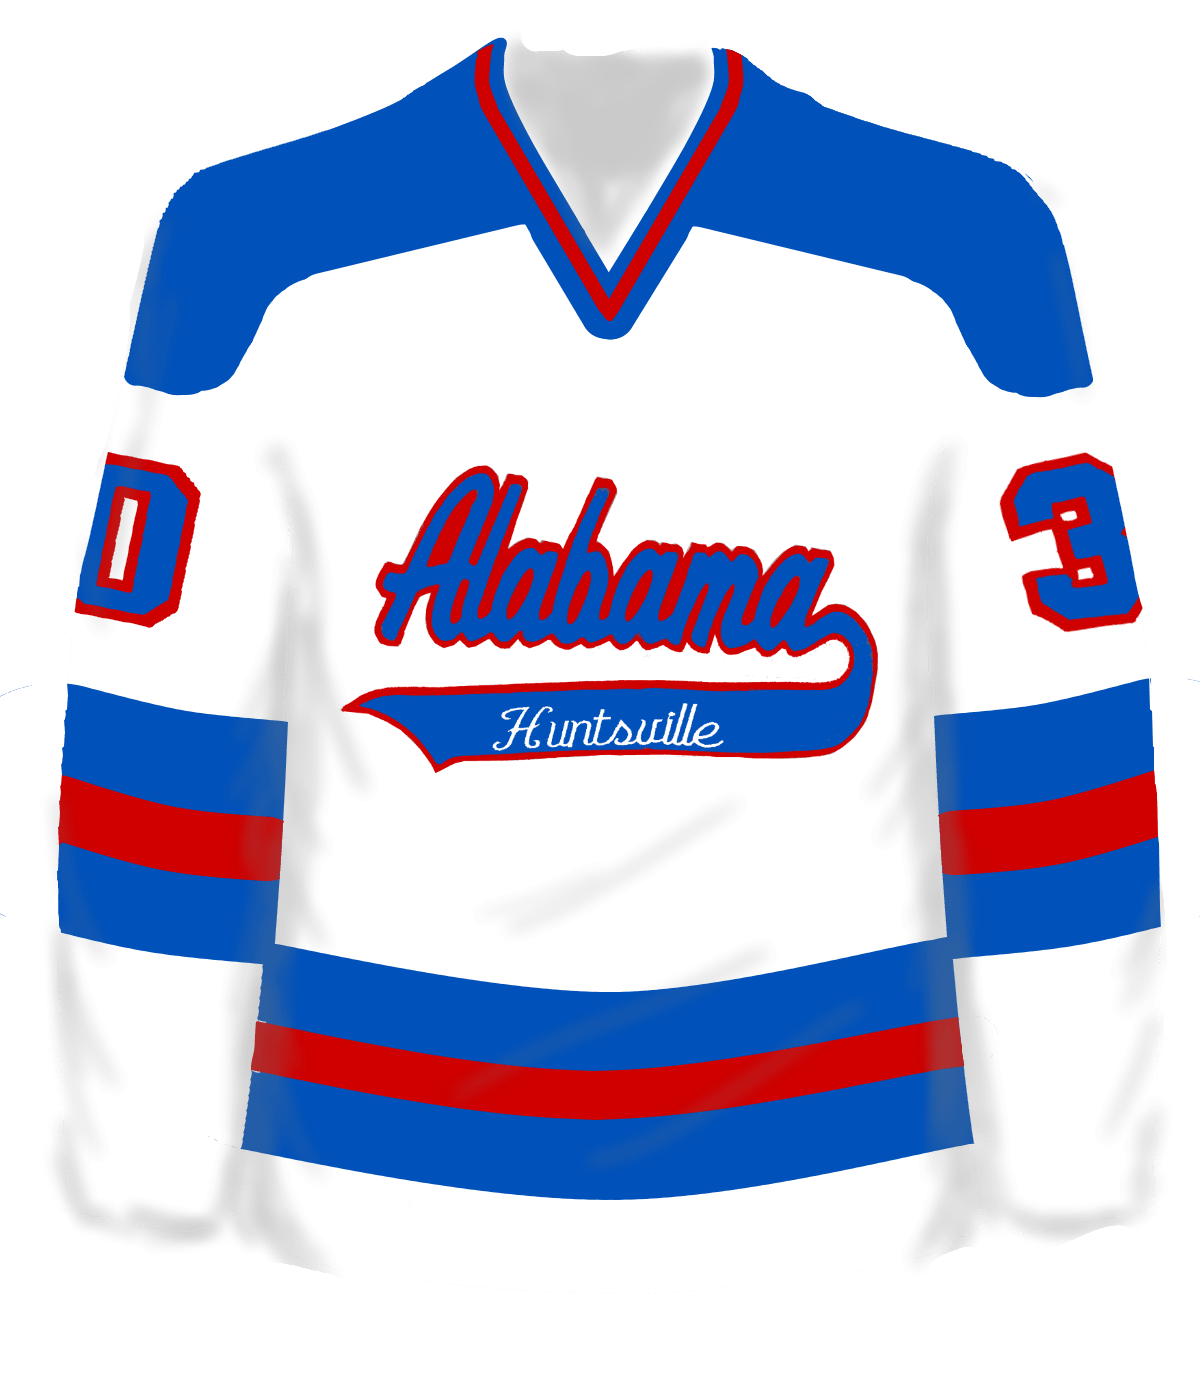 alabama huntsville hockey jersey